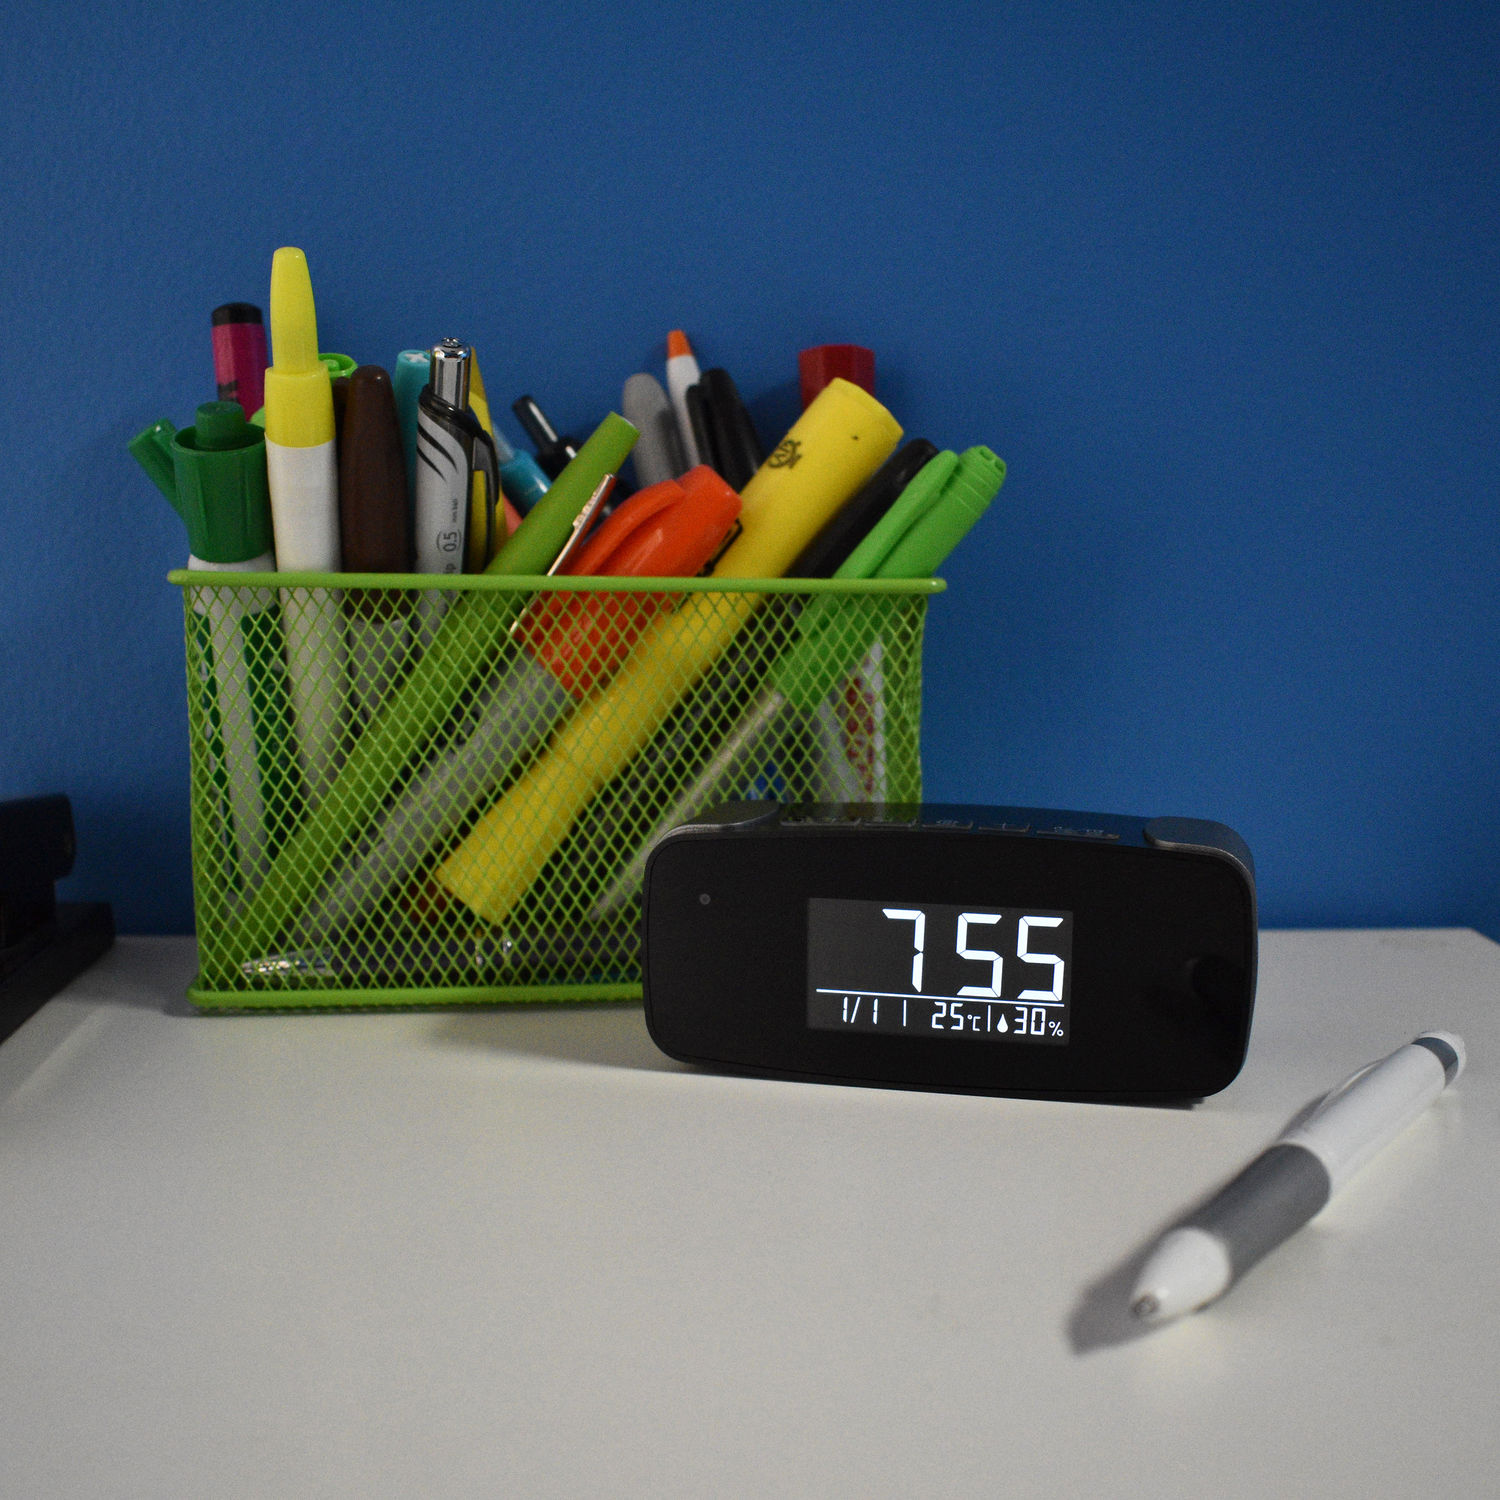 Mini Gadgets Mini Alarm Clock with 1080p Covert Night Vision Wi-Fi Camera